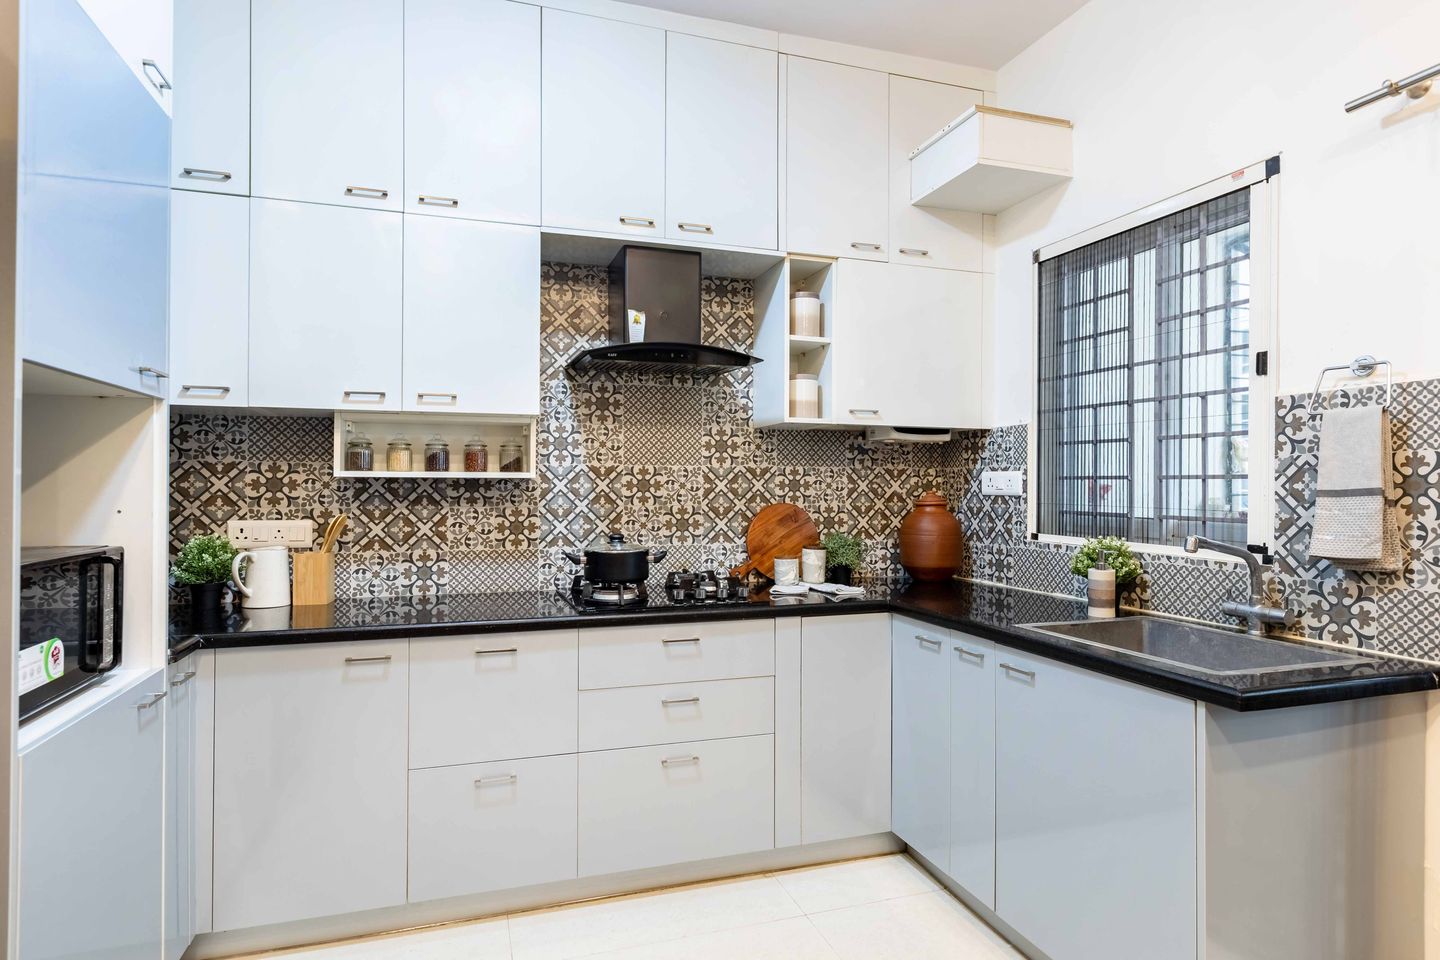 U-Shaped Modern Kitchen Design With A Granite Countertop